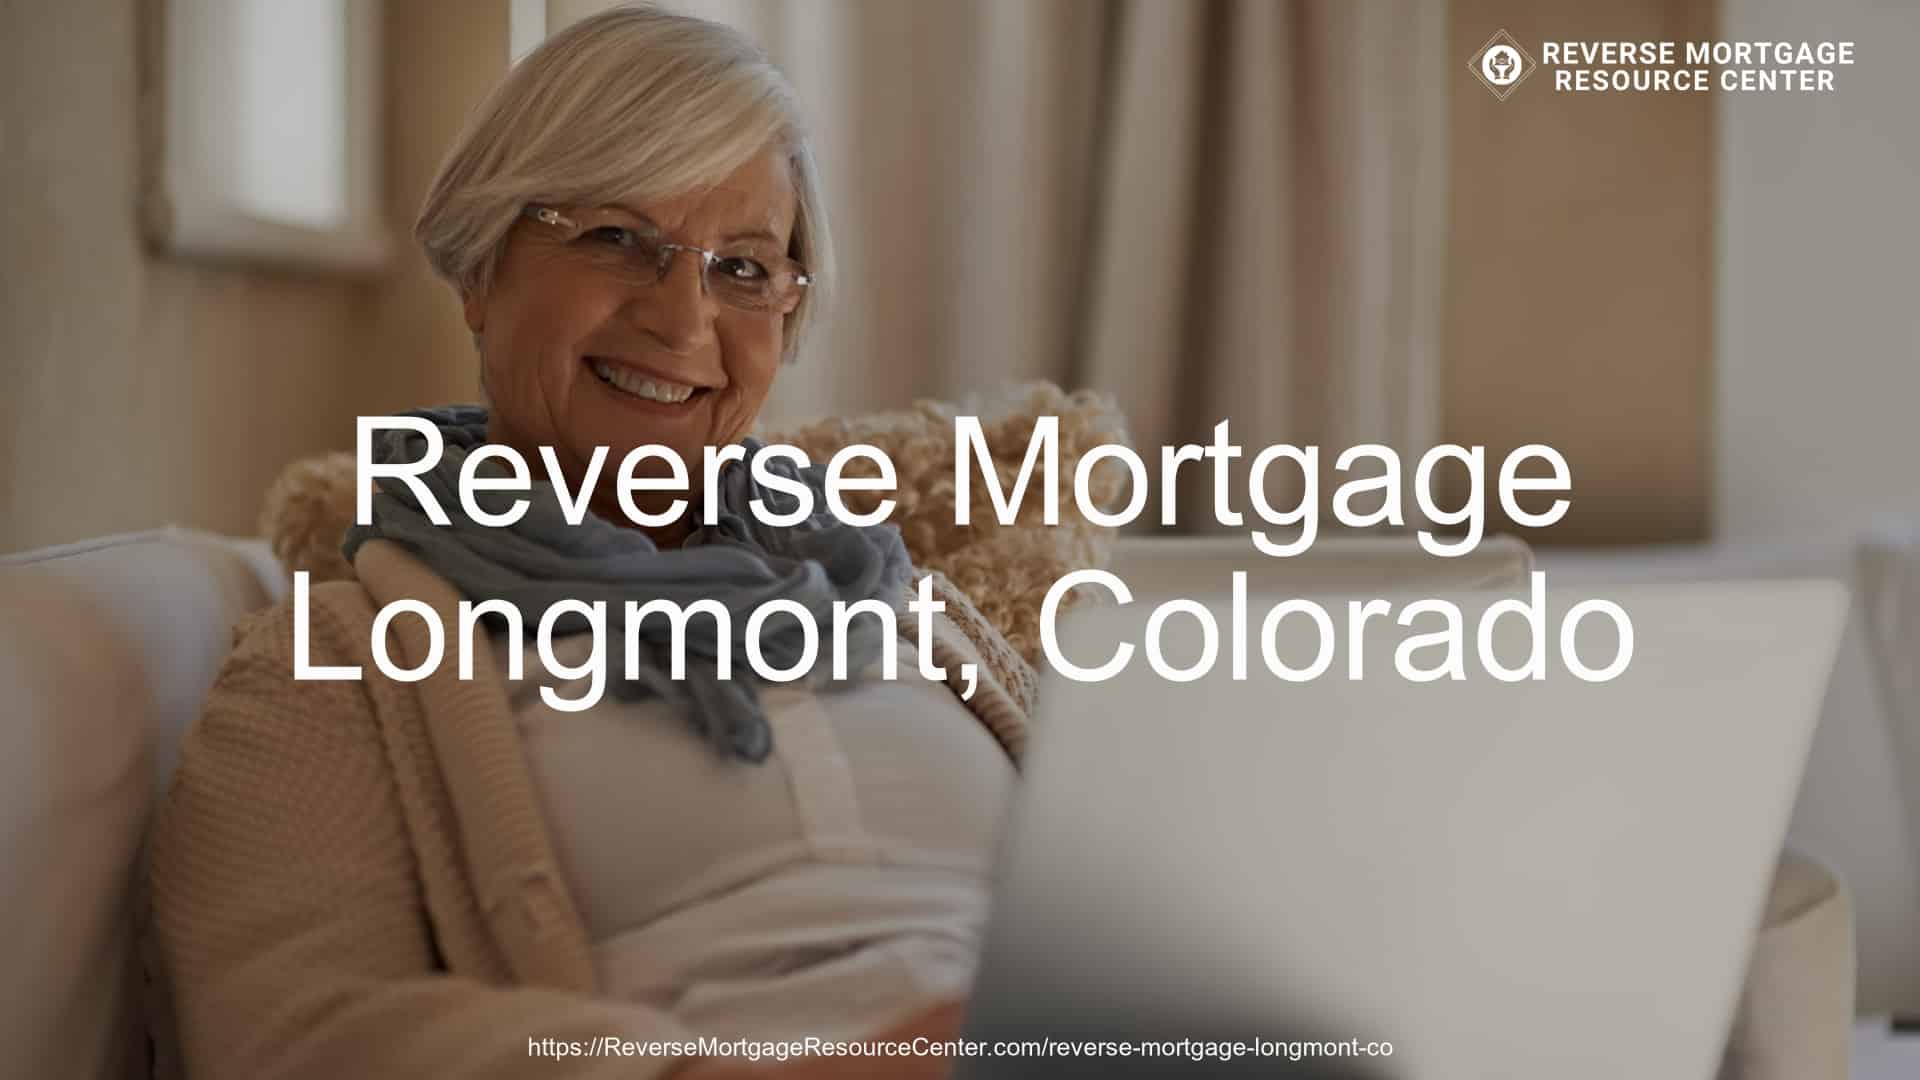 Reverse Mortgage Loans in Longmont Colorado